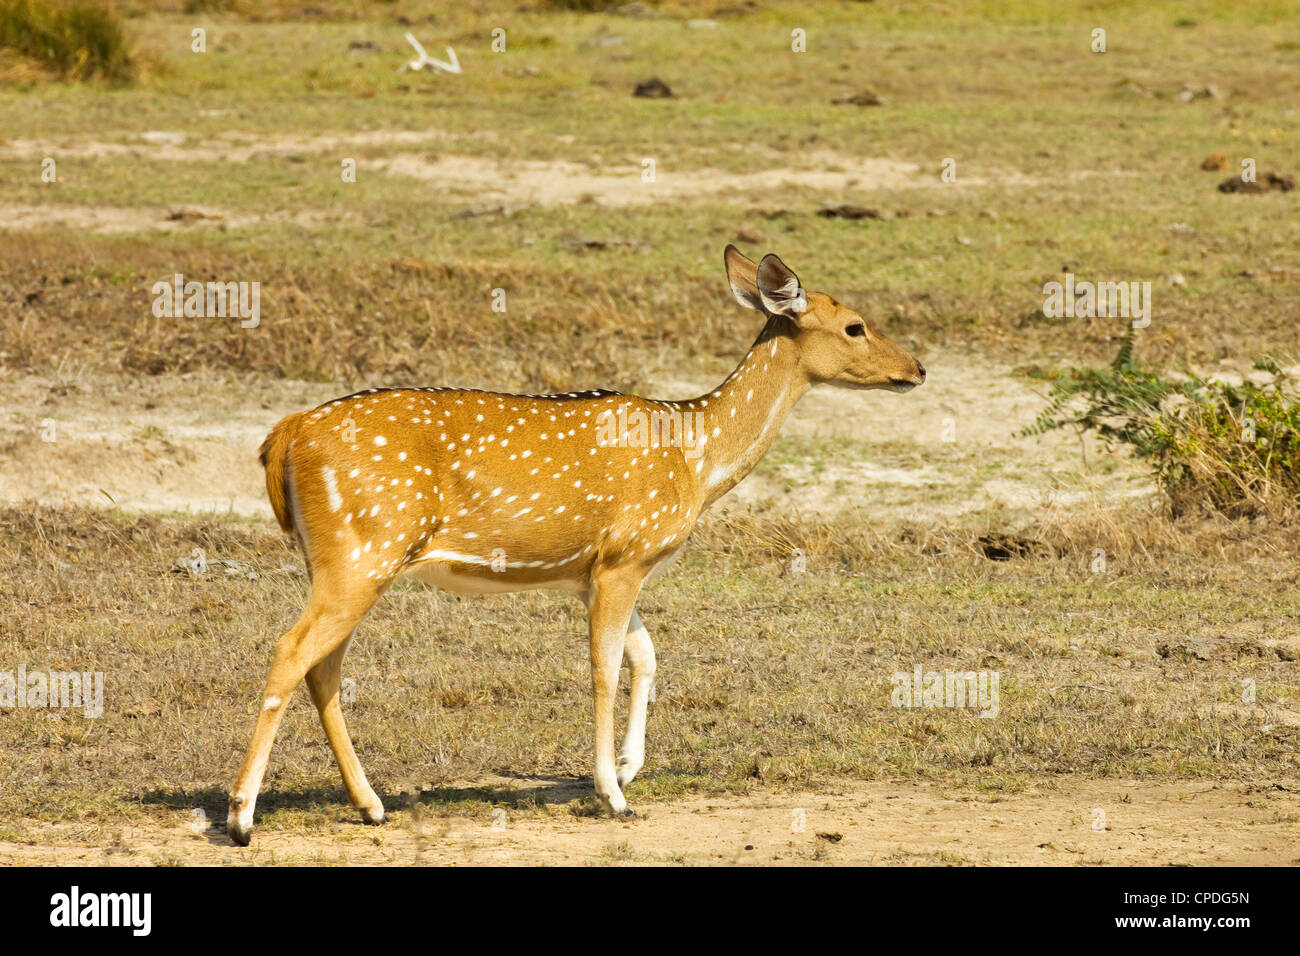 Axis du Sri Lanka ou Ceylan spotted deer de Kumana, anciennement Parc national de Yala est, Kumana, Rhône-Alpes, France Banque D'Images